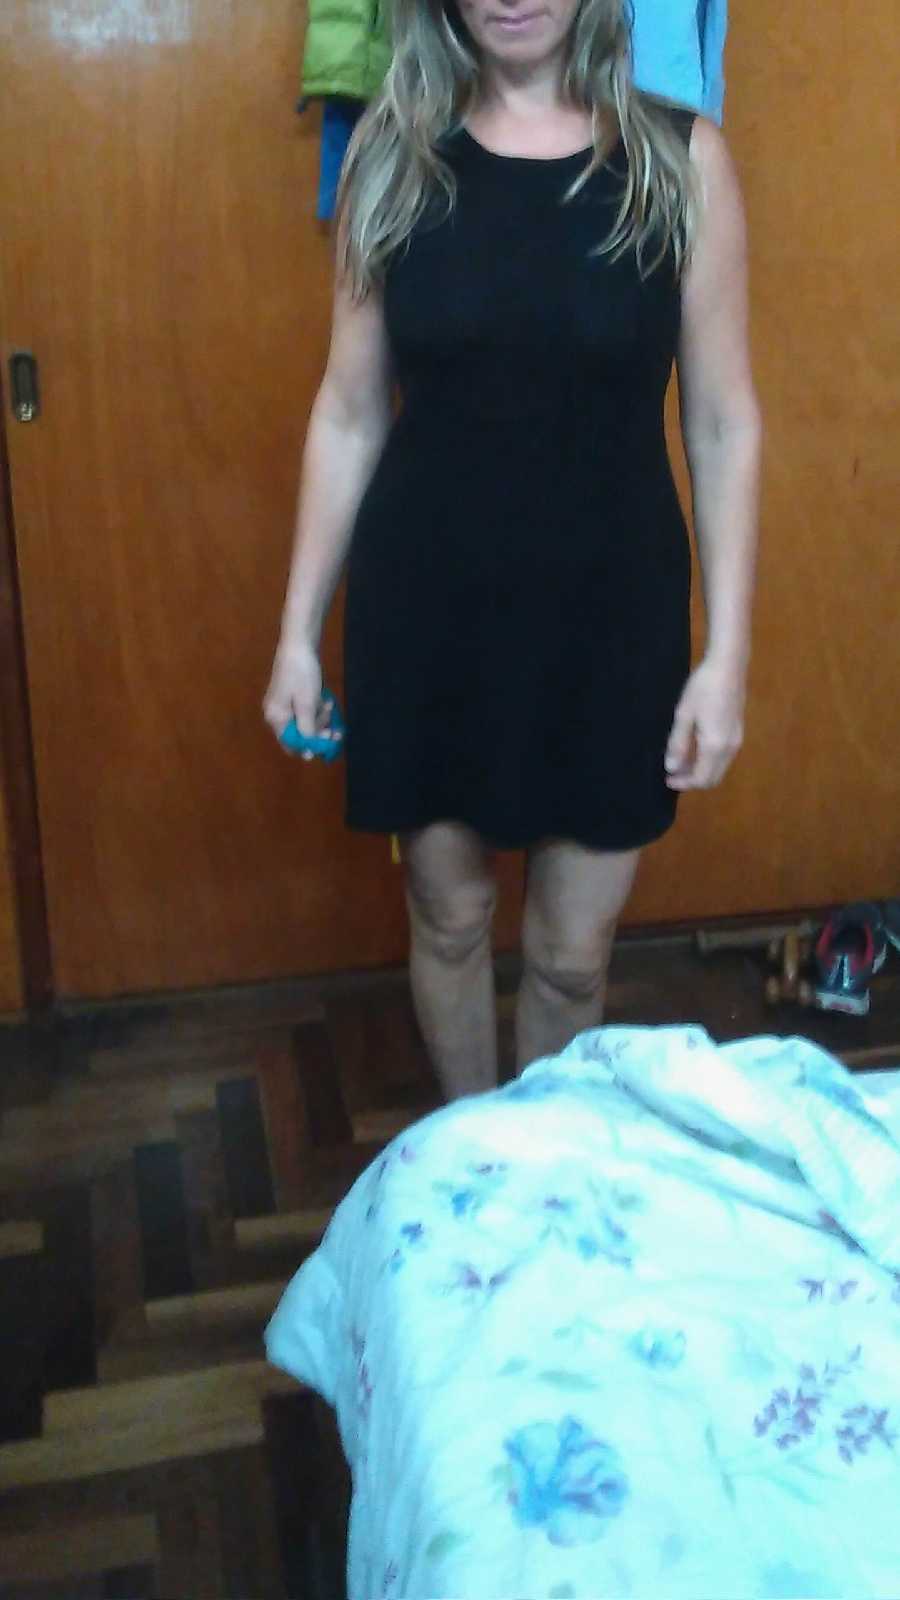 Bending over in a Black Dress